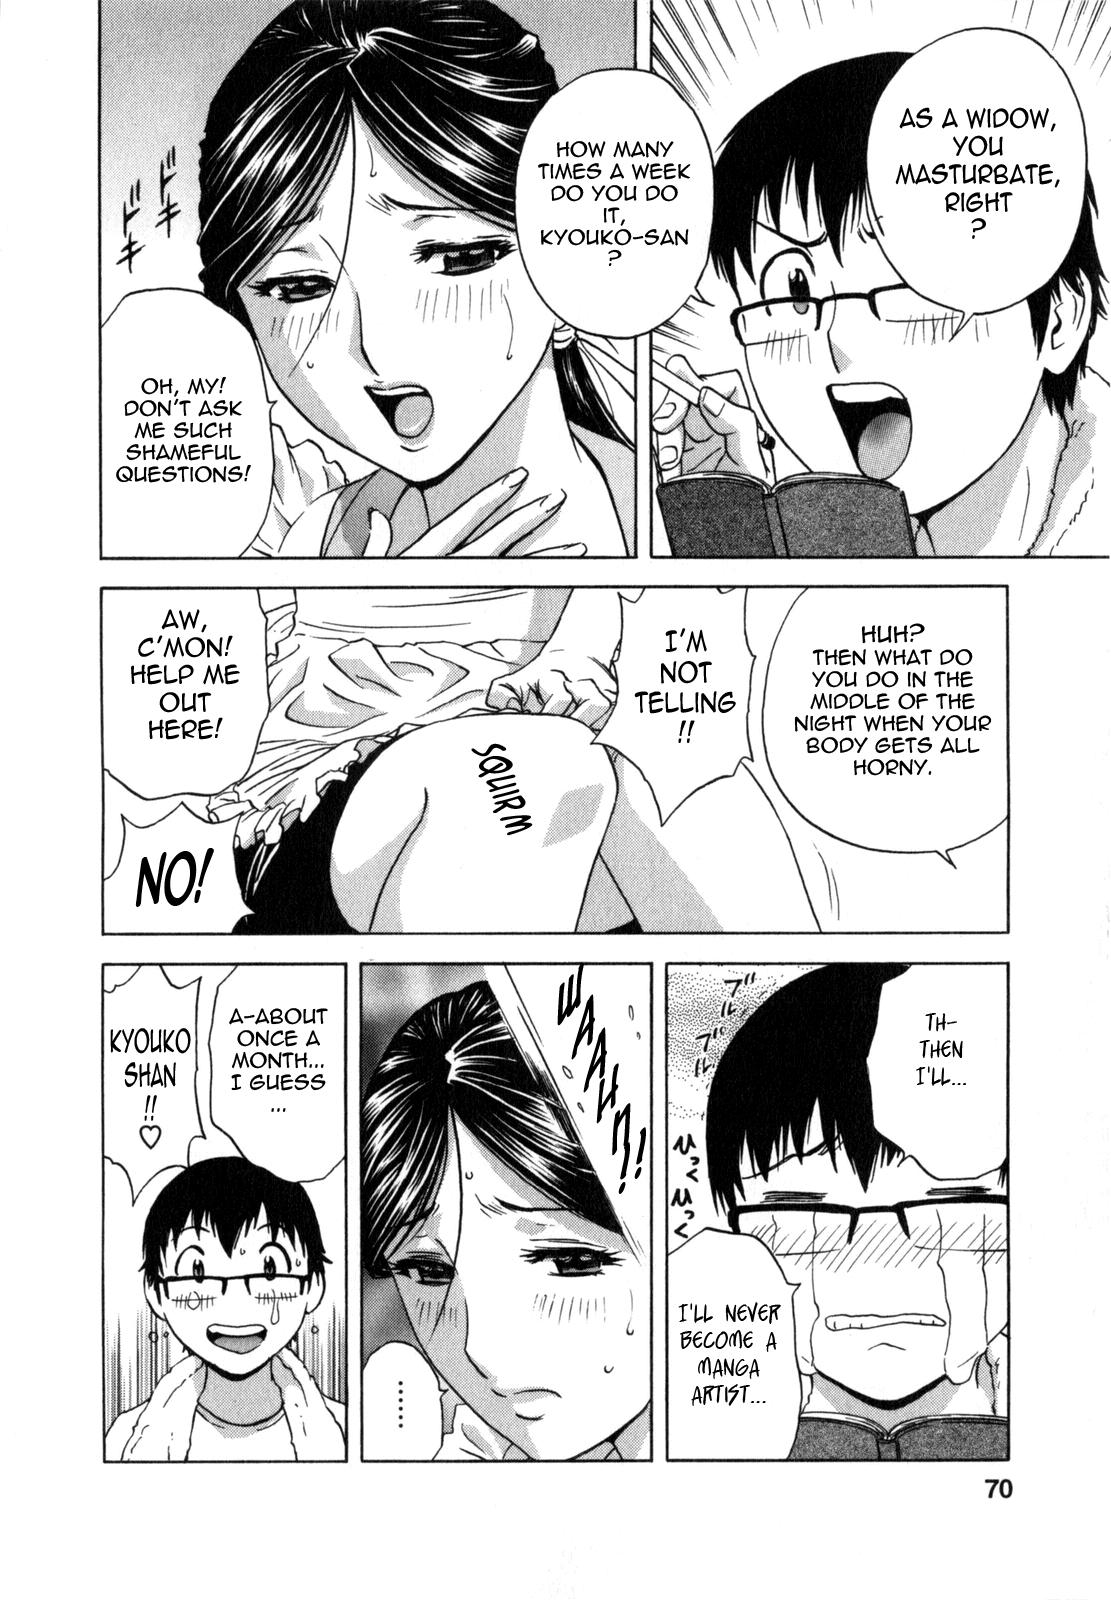 [Hidemaru] Life with Married Women Just Like a Manga 1 - Ch. 1-9 [English] {Tadanohito} 73